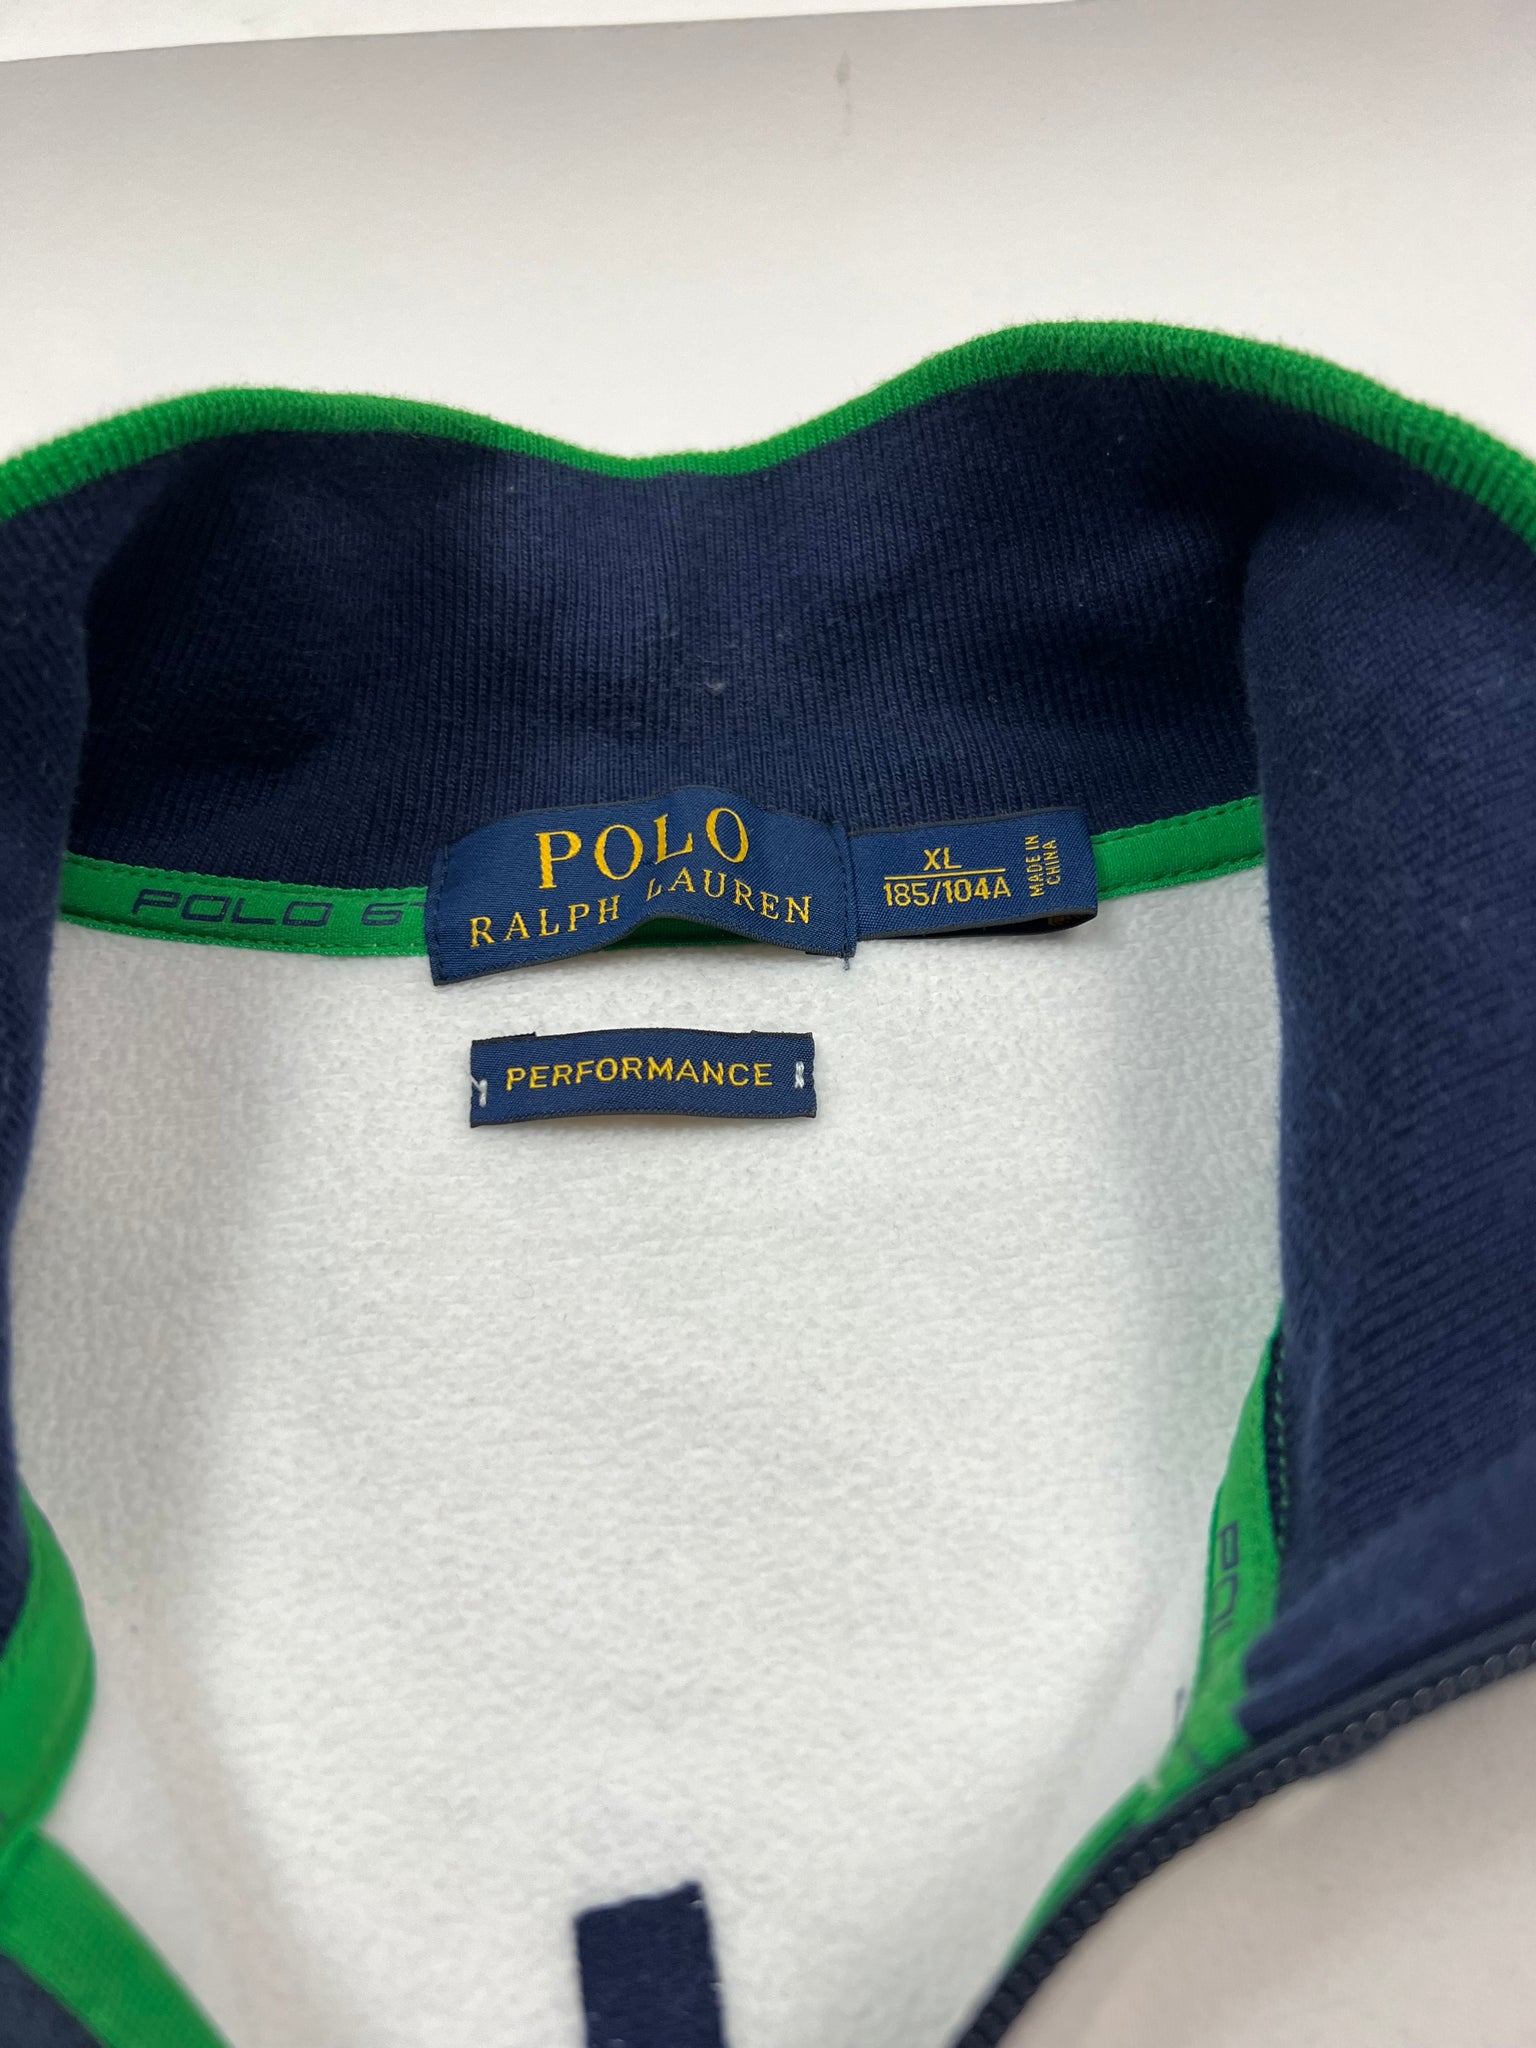 Polo Ralph Lauren Zip Up (XL)